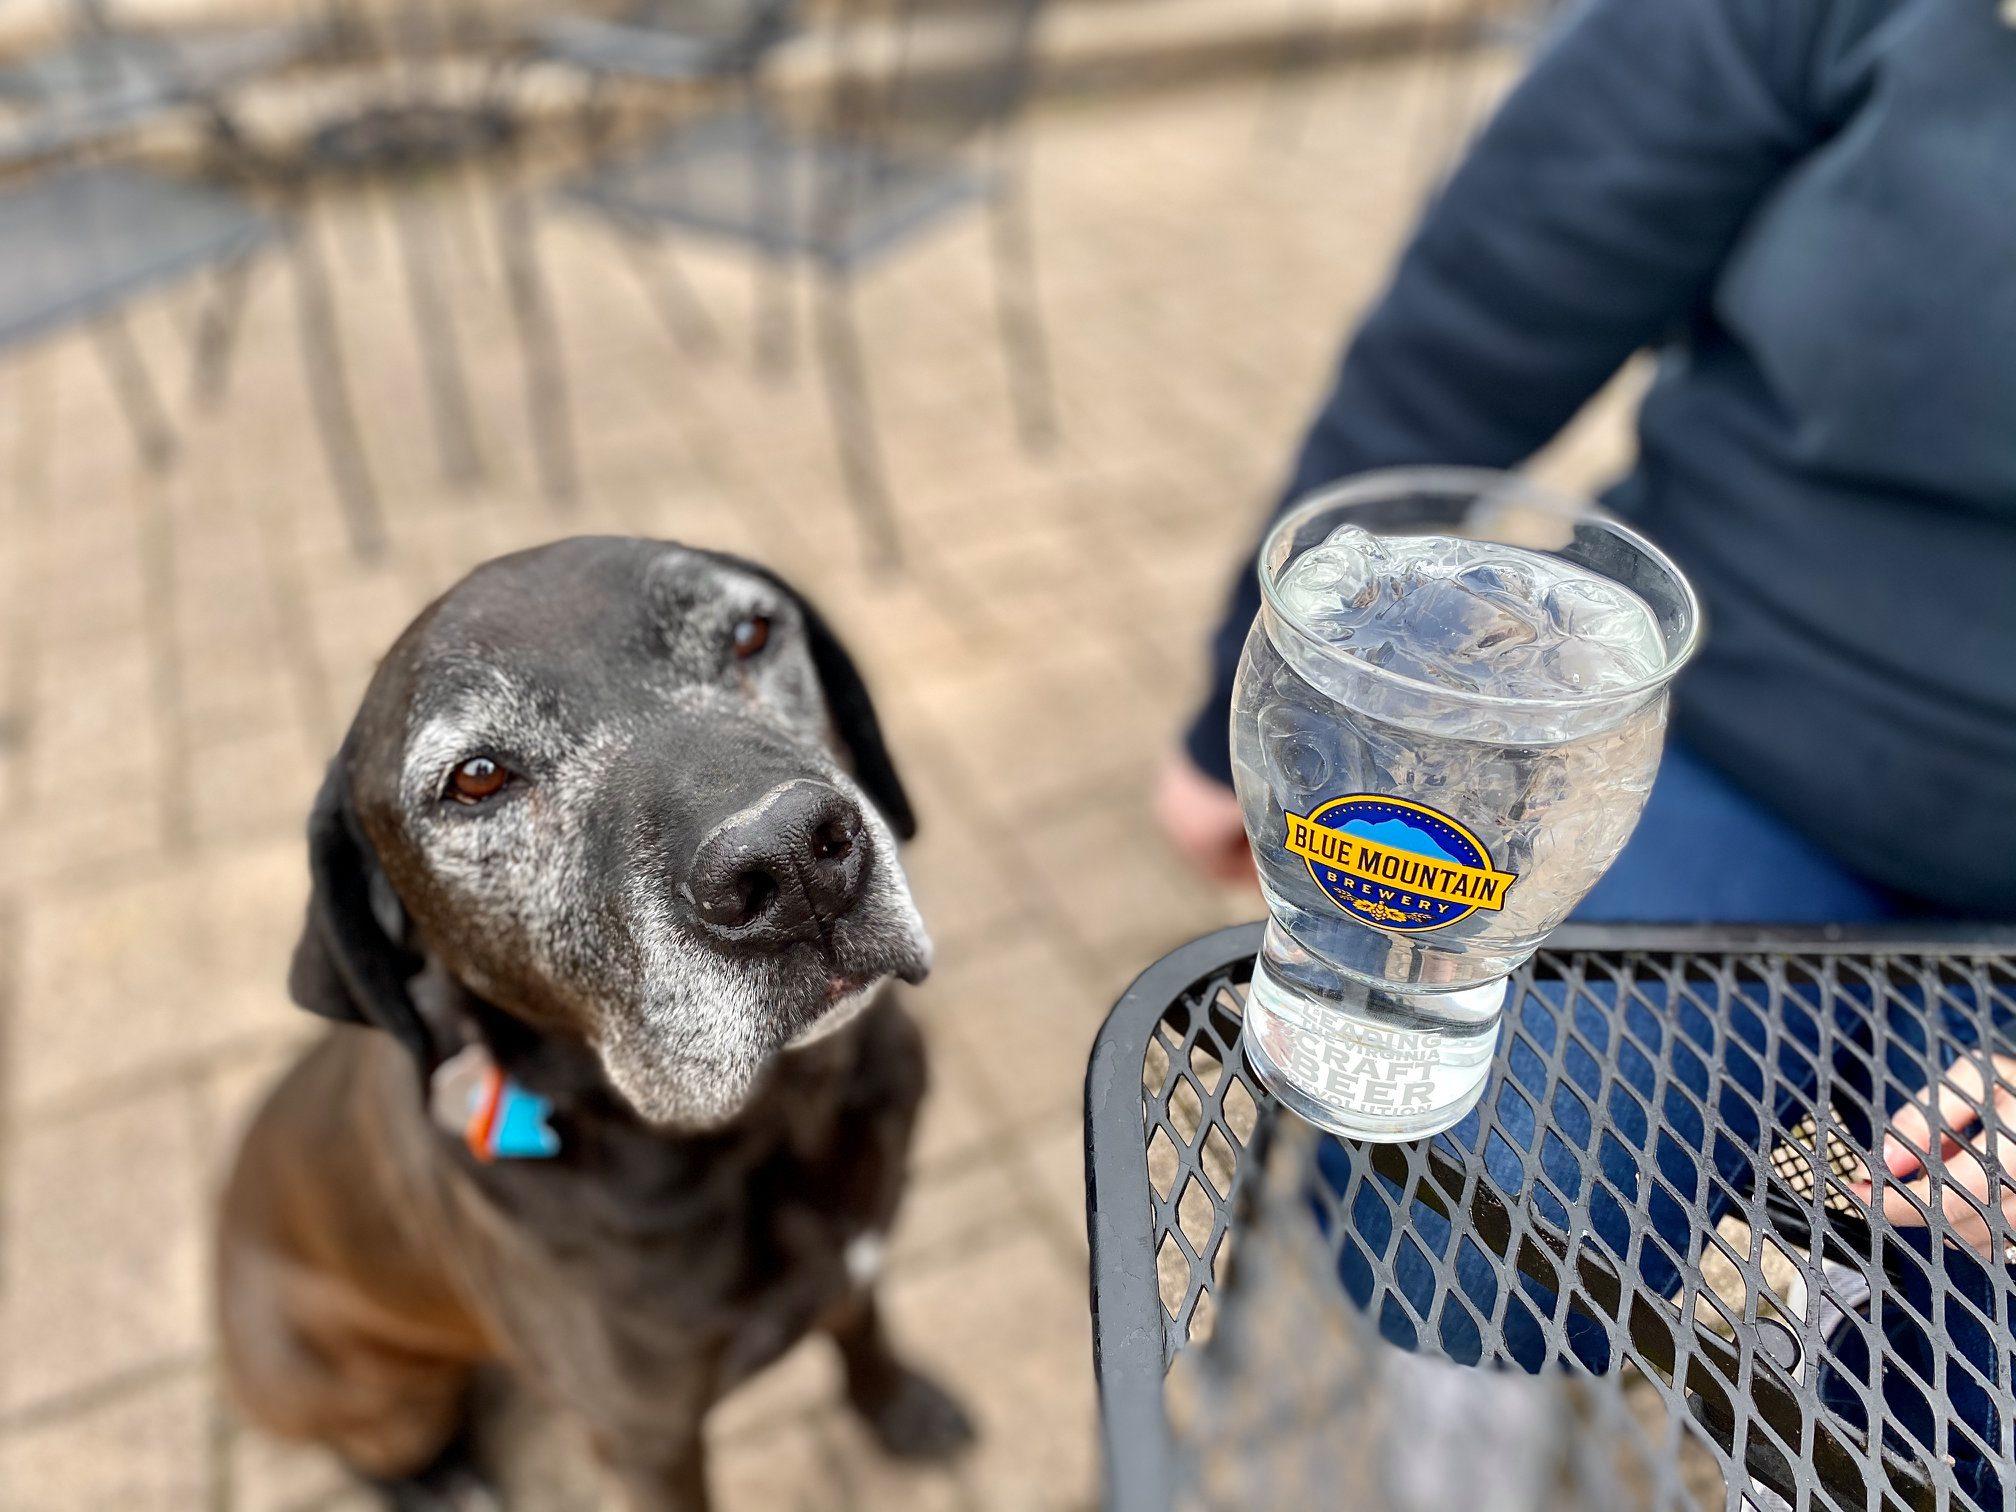 Pet Friendly Blue Mountain Brewery